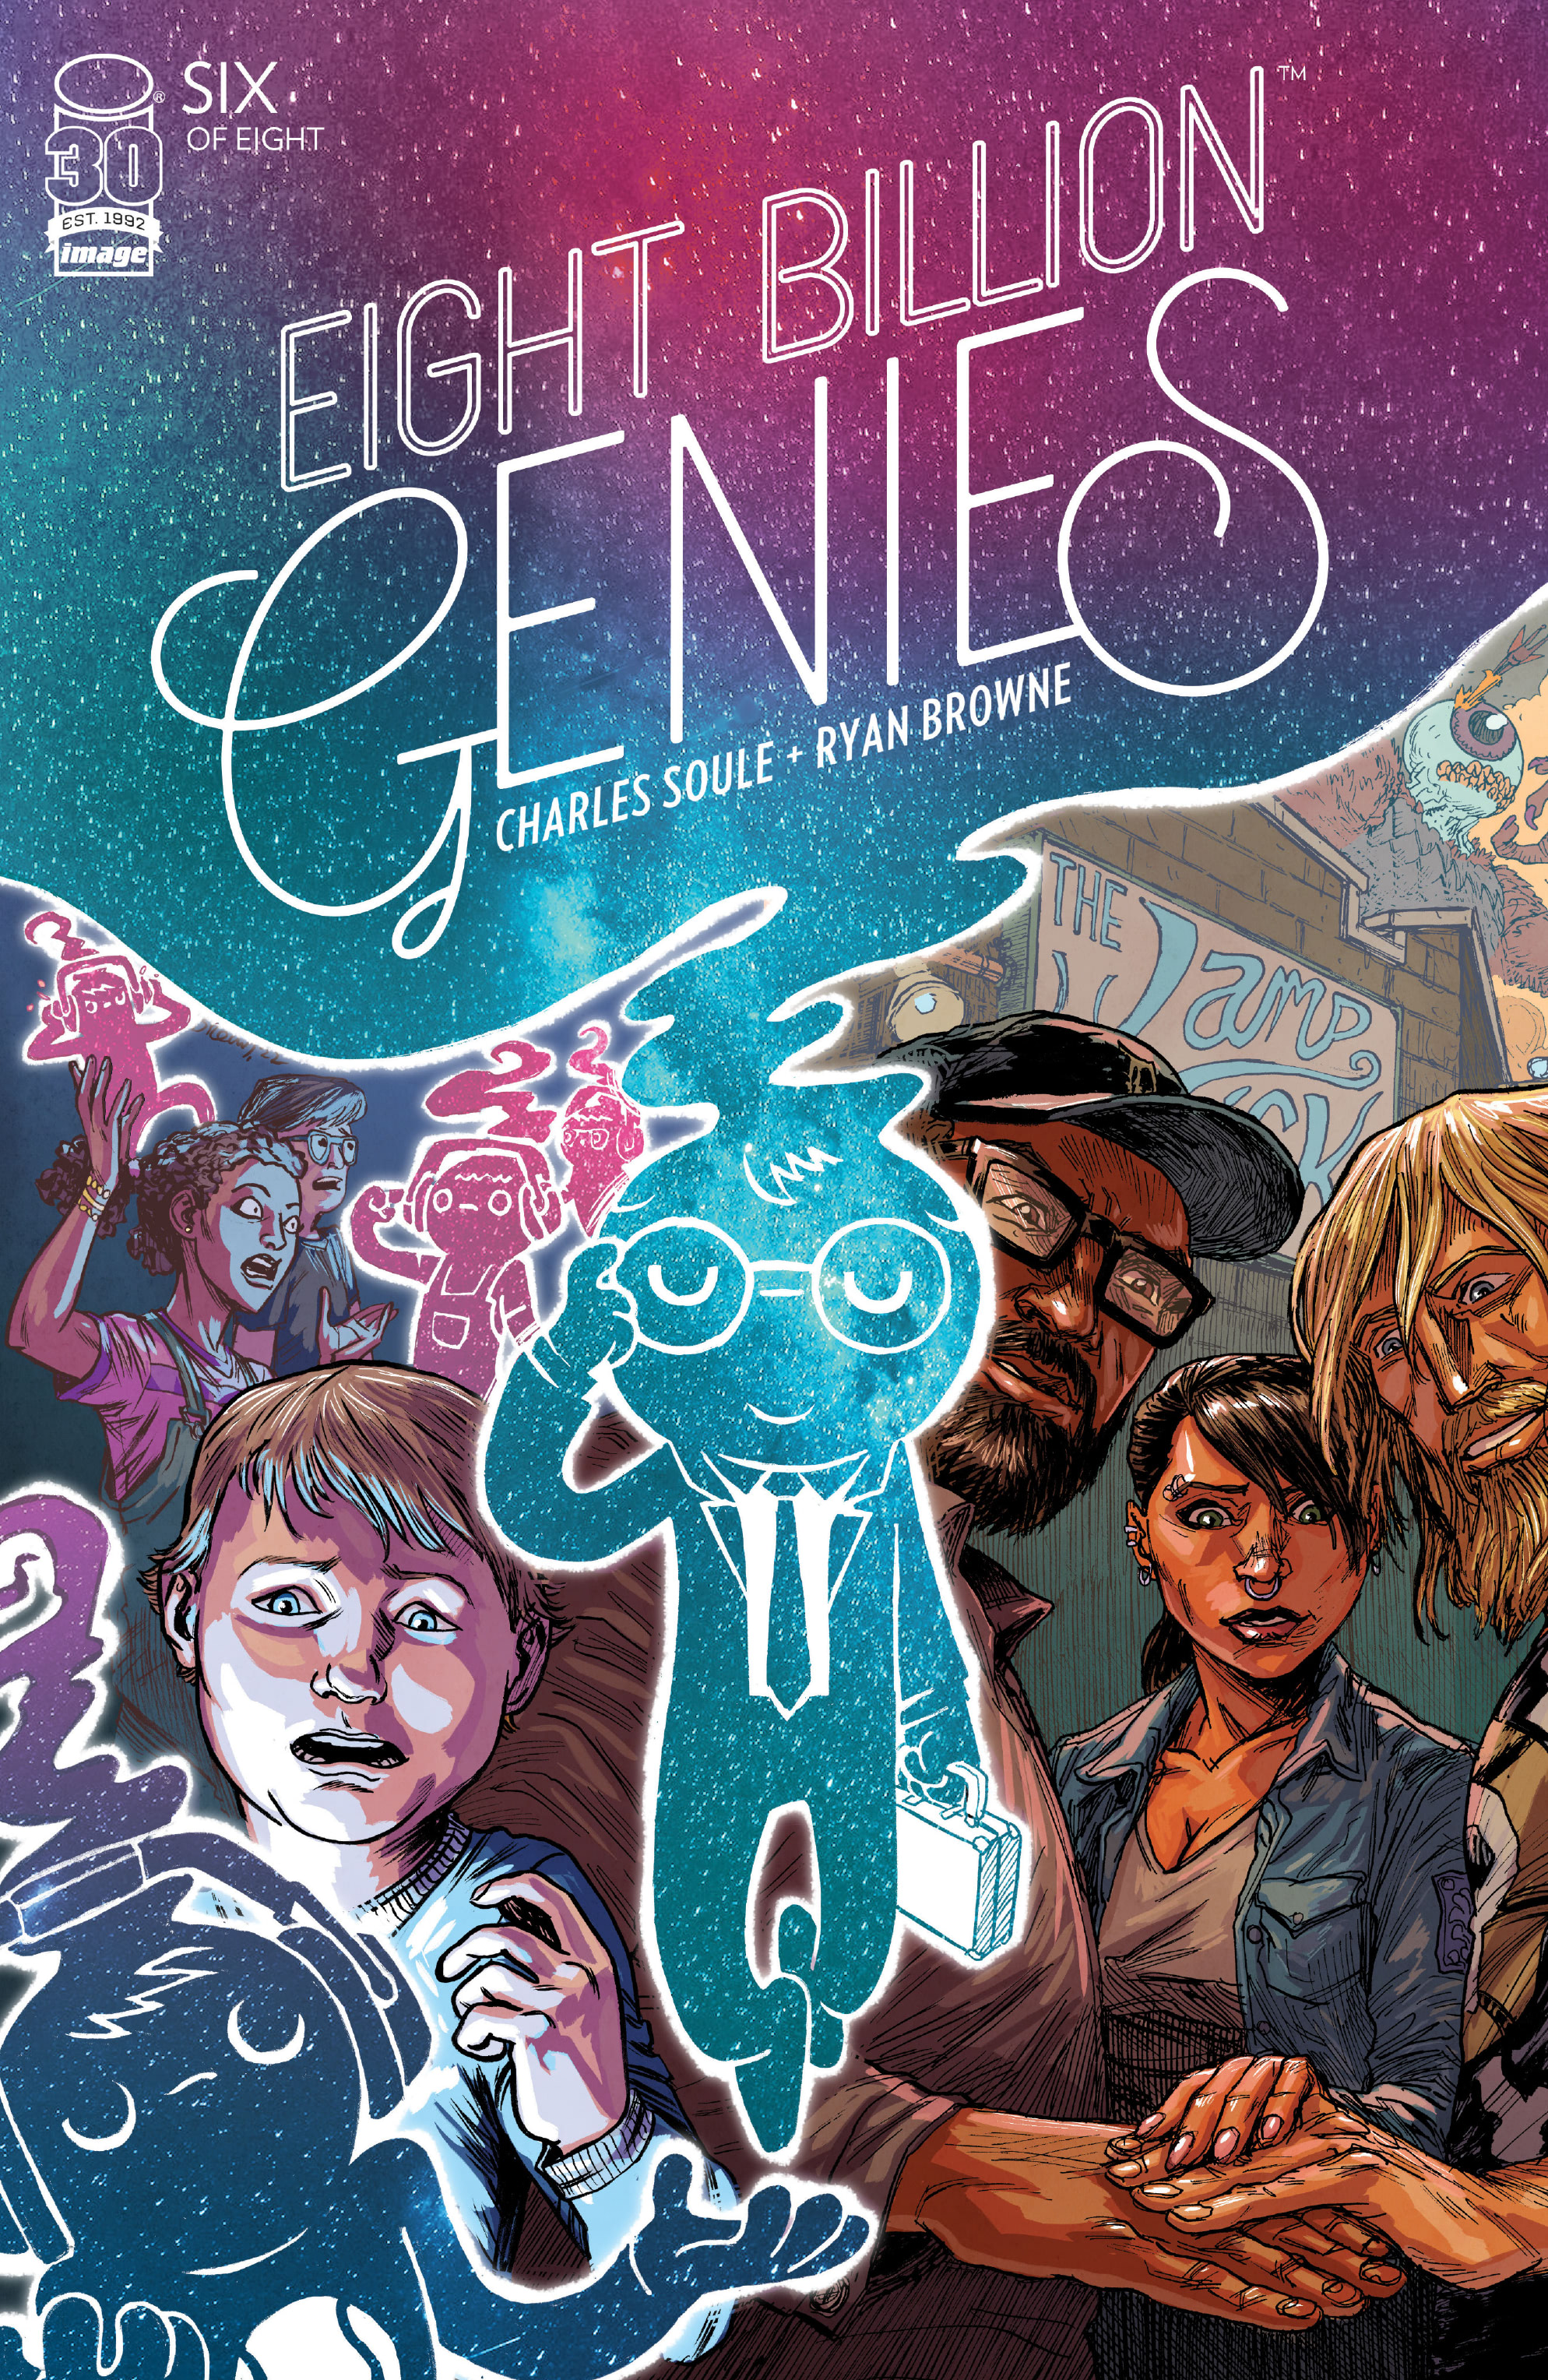 Read online Eight Billion Genies comic -  Issue #6 - 1